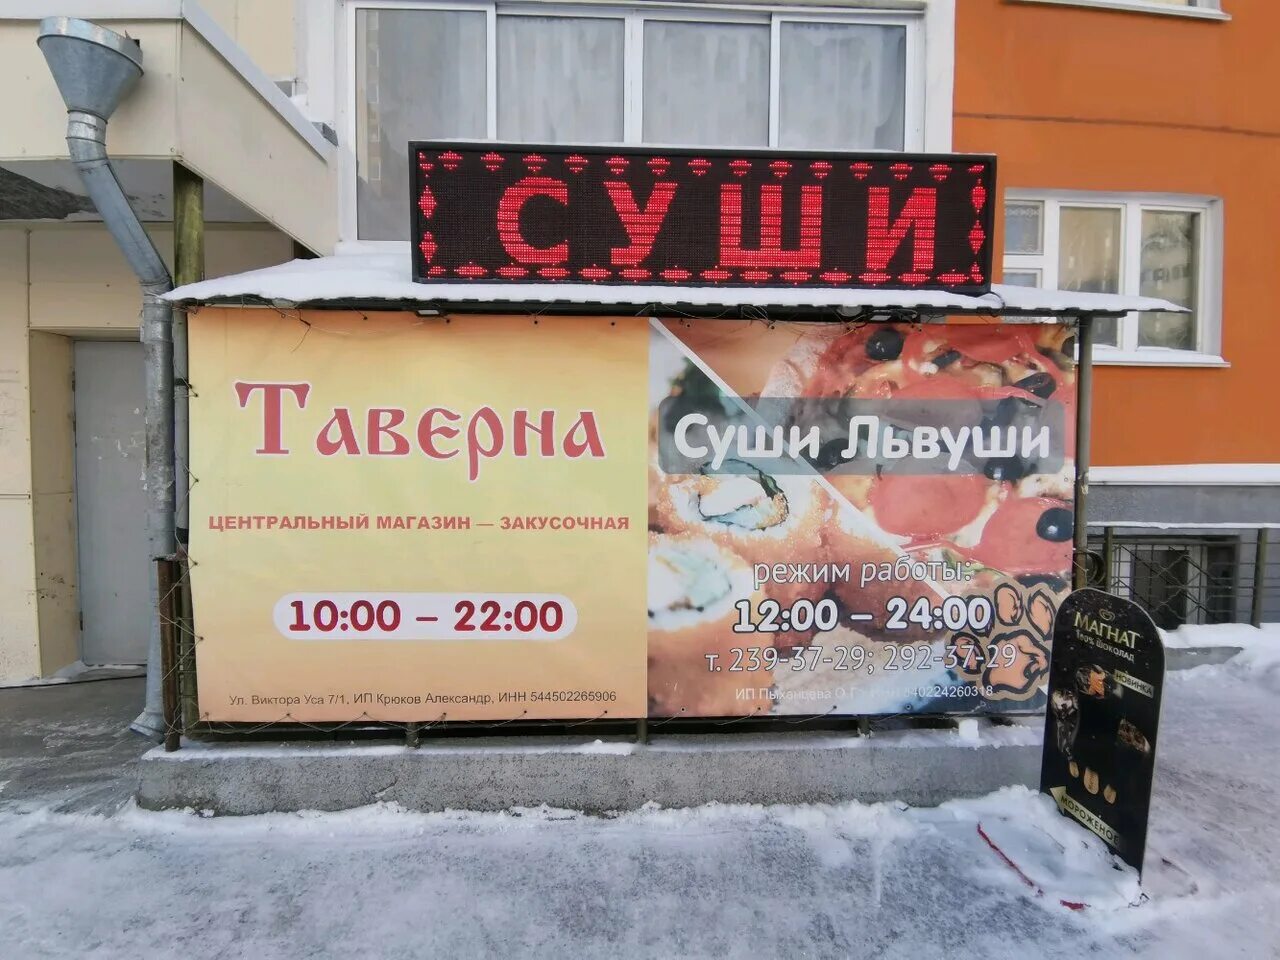 Таверна в Новосибирске. Суши Виктора Уса 11. Магазин таверна режим раб. Суши львуши